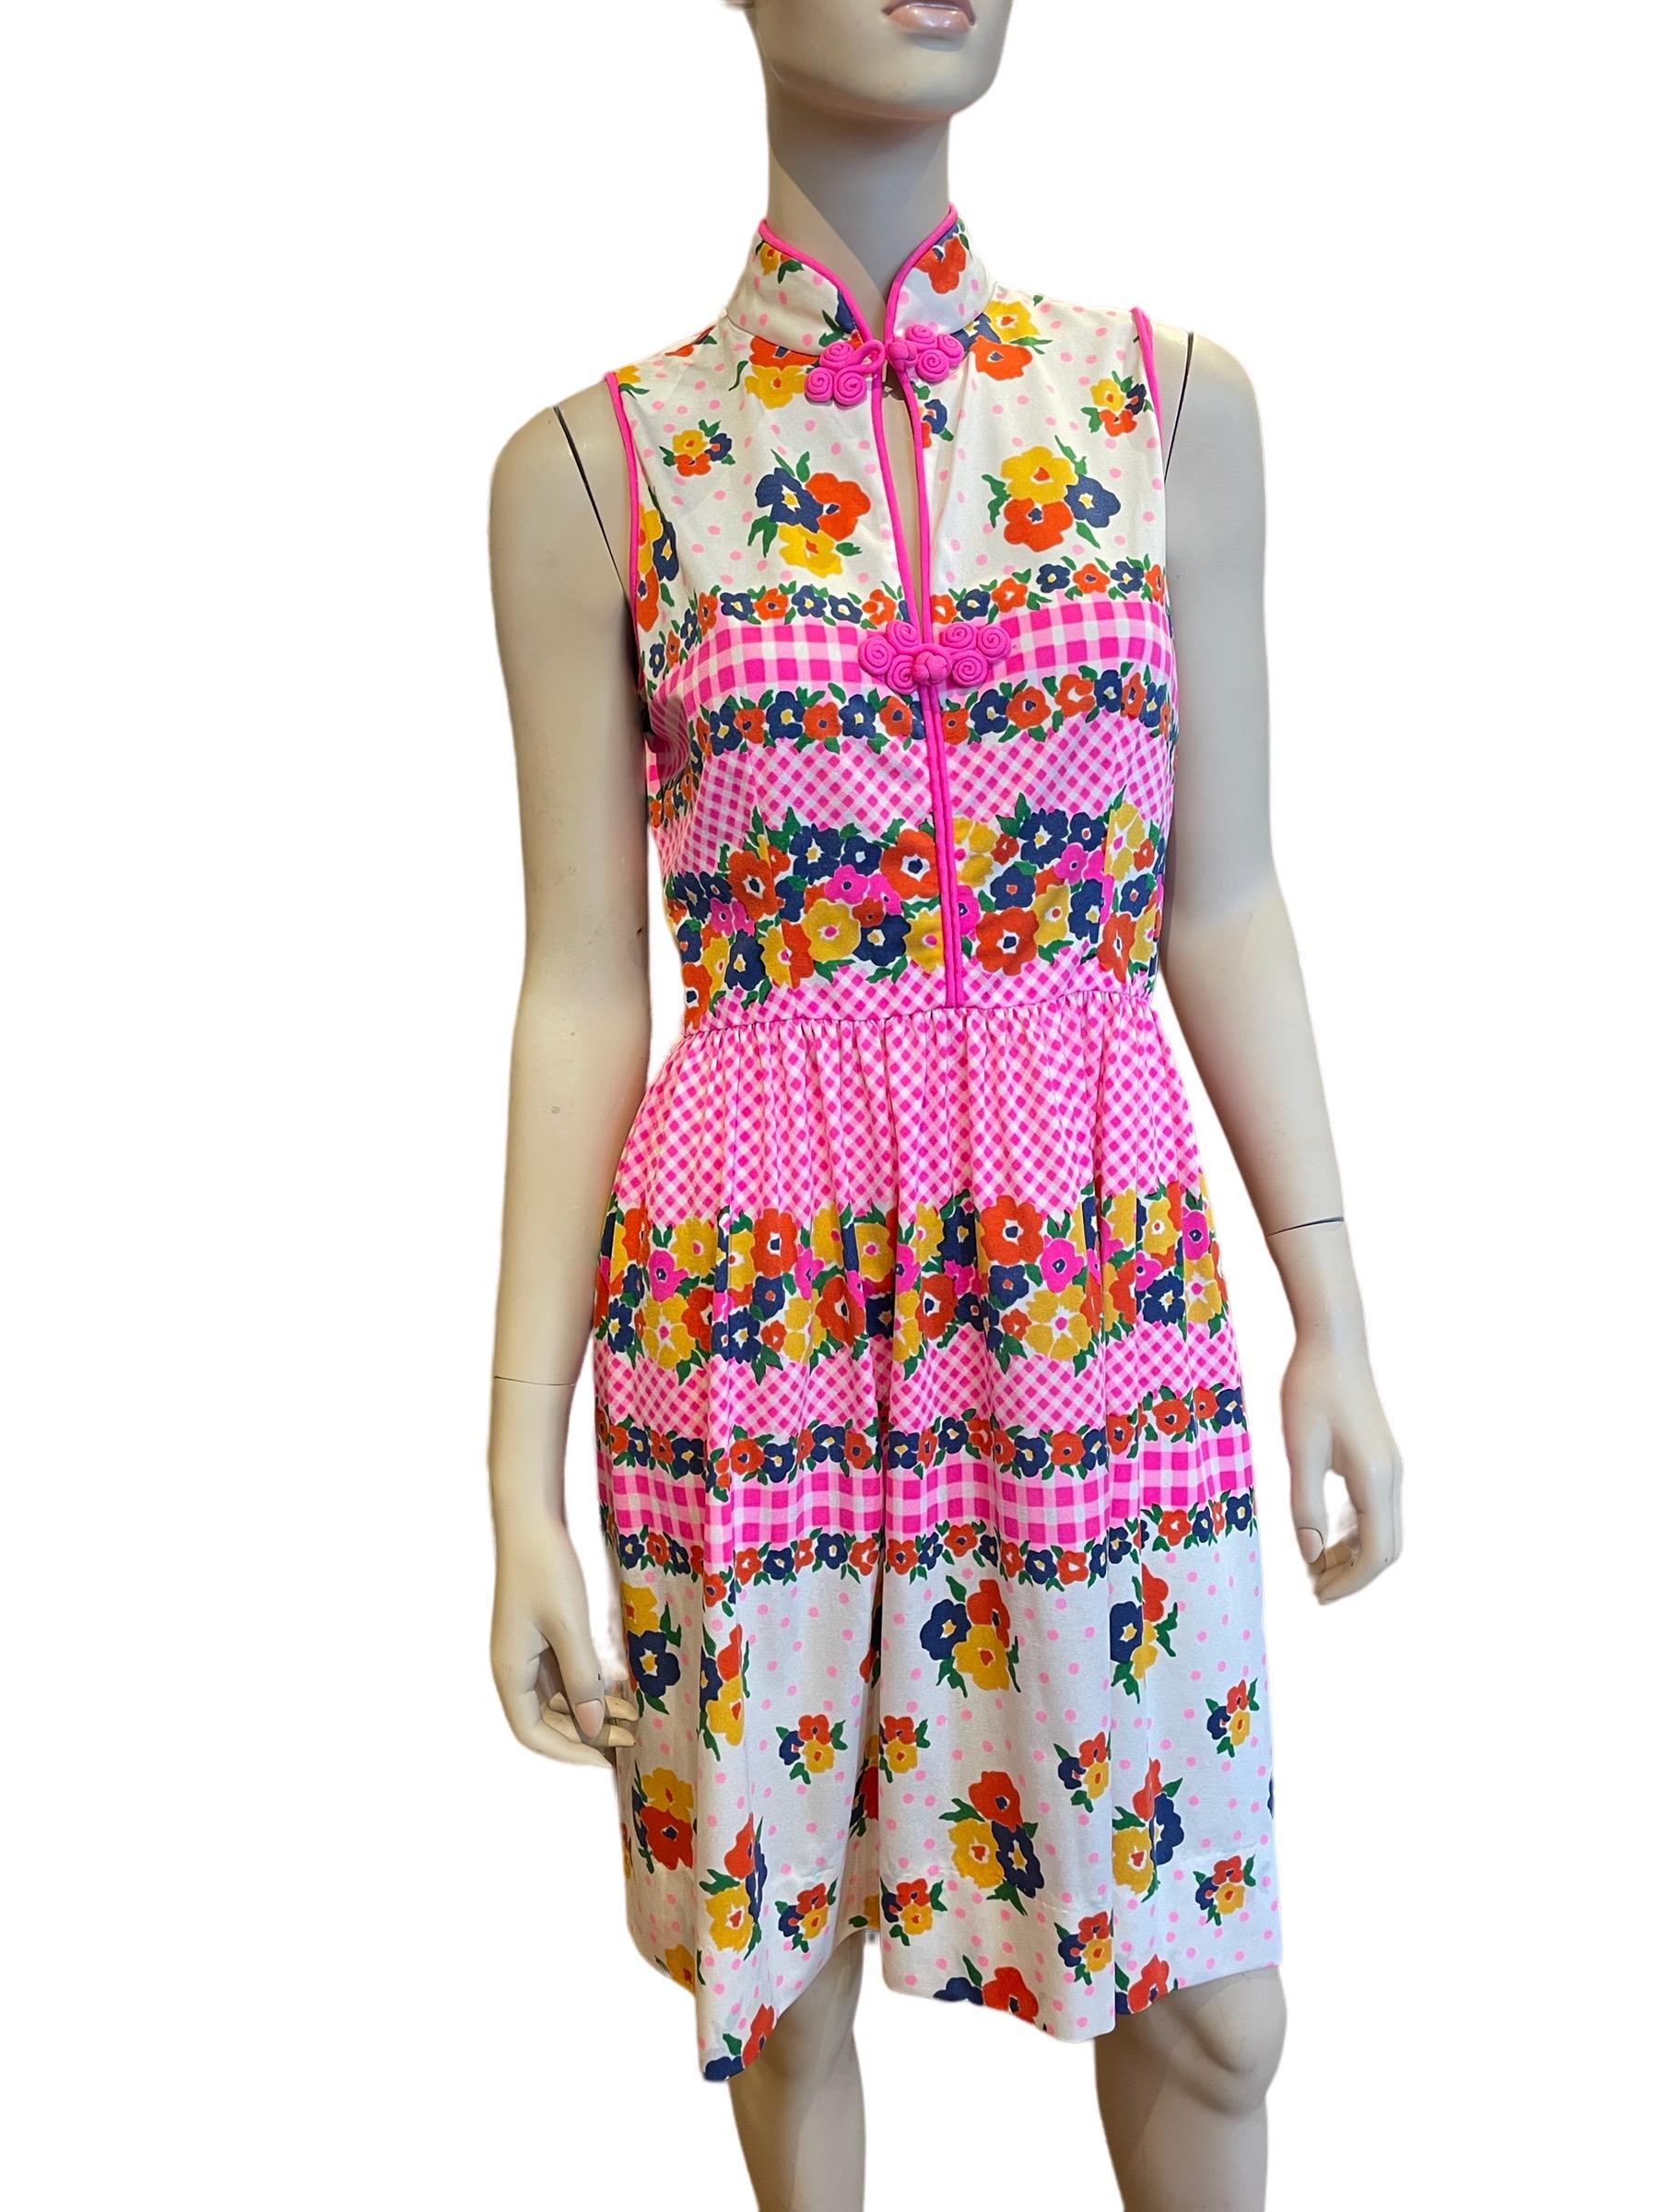 1960 Oscar De La Renta Hot Pink Floral Mandarin Style Sleeveless Dress - Rare designer Vintage piece !

Poitrine : 36
Taille : 28